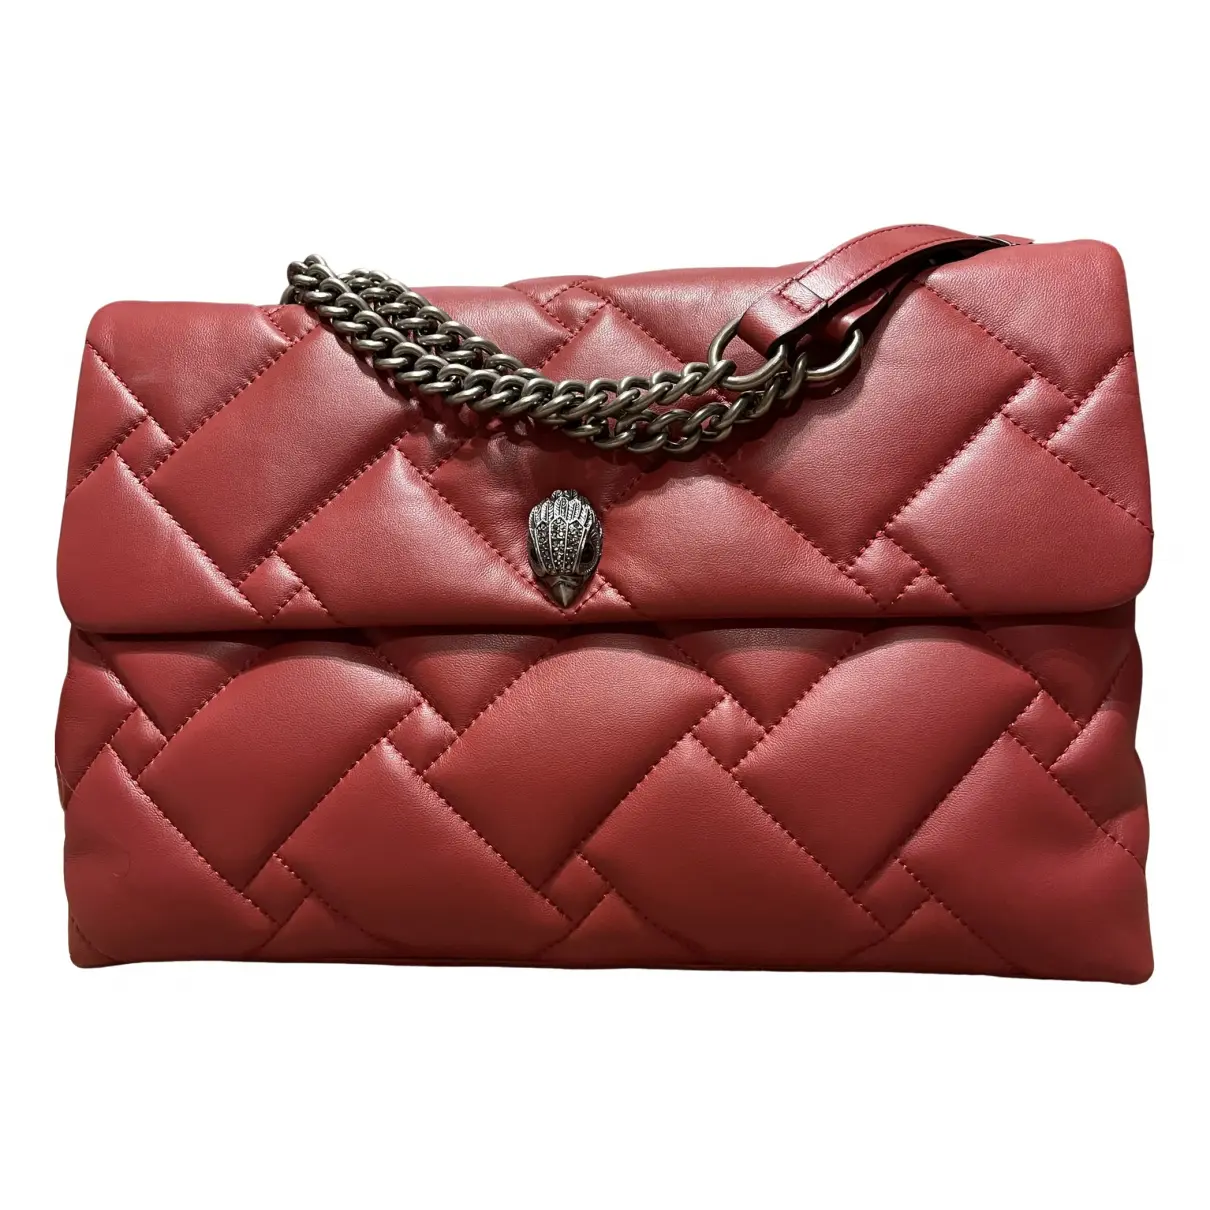 Leather handbag Kurt Geiger